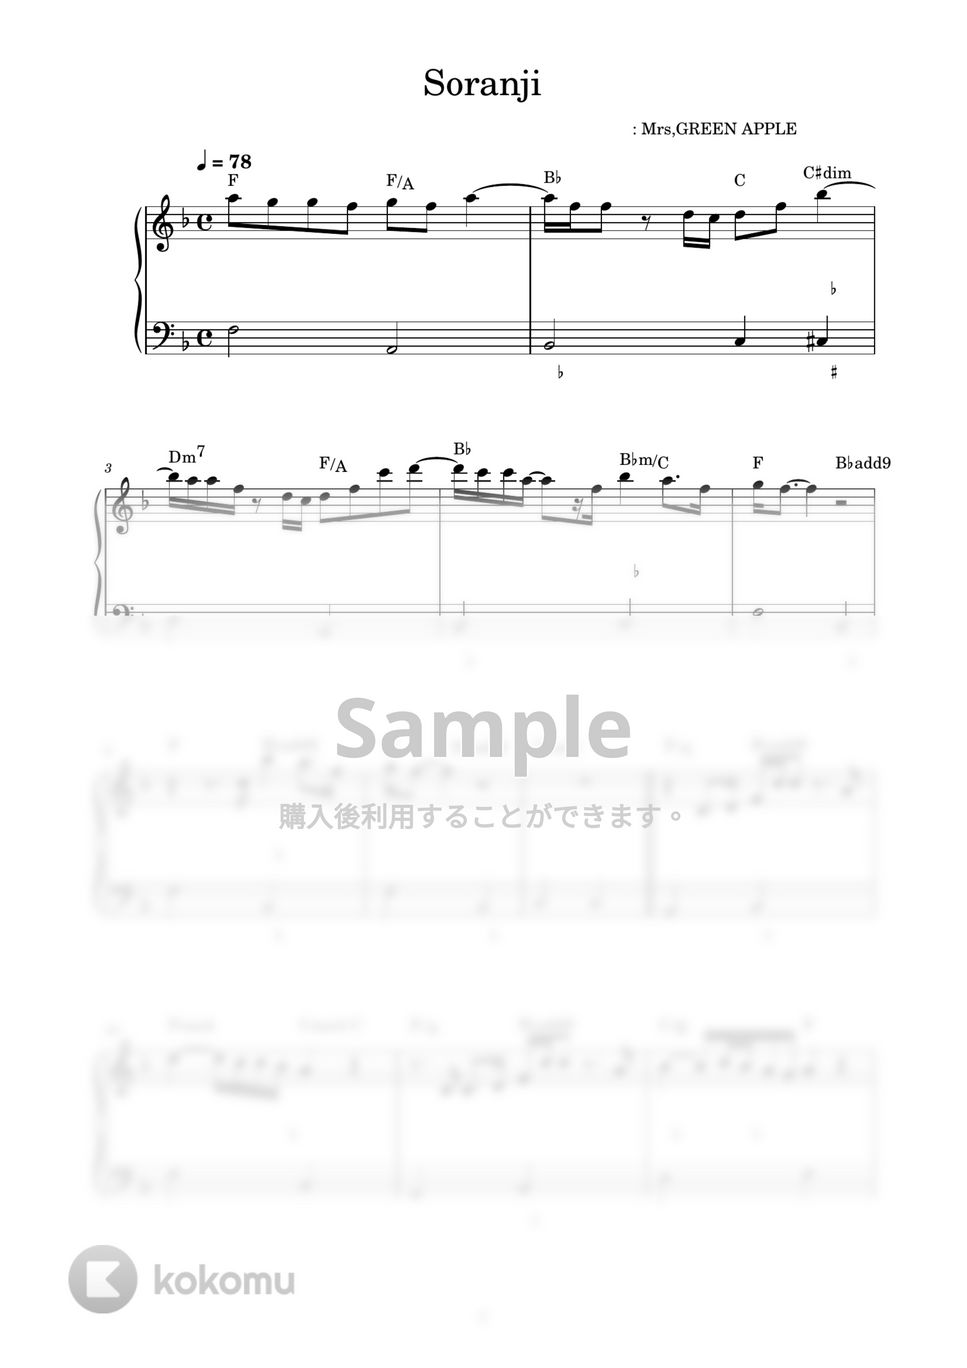 Mrs. GREEN APPLE - Soranji (ピアノ楽譜 / かんたん両手 / 歌詞付き / ドレミ付き / 初心者向き) by piano.tokyo